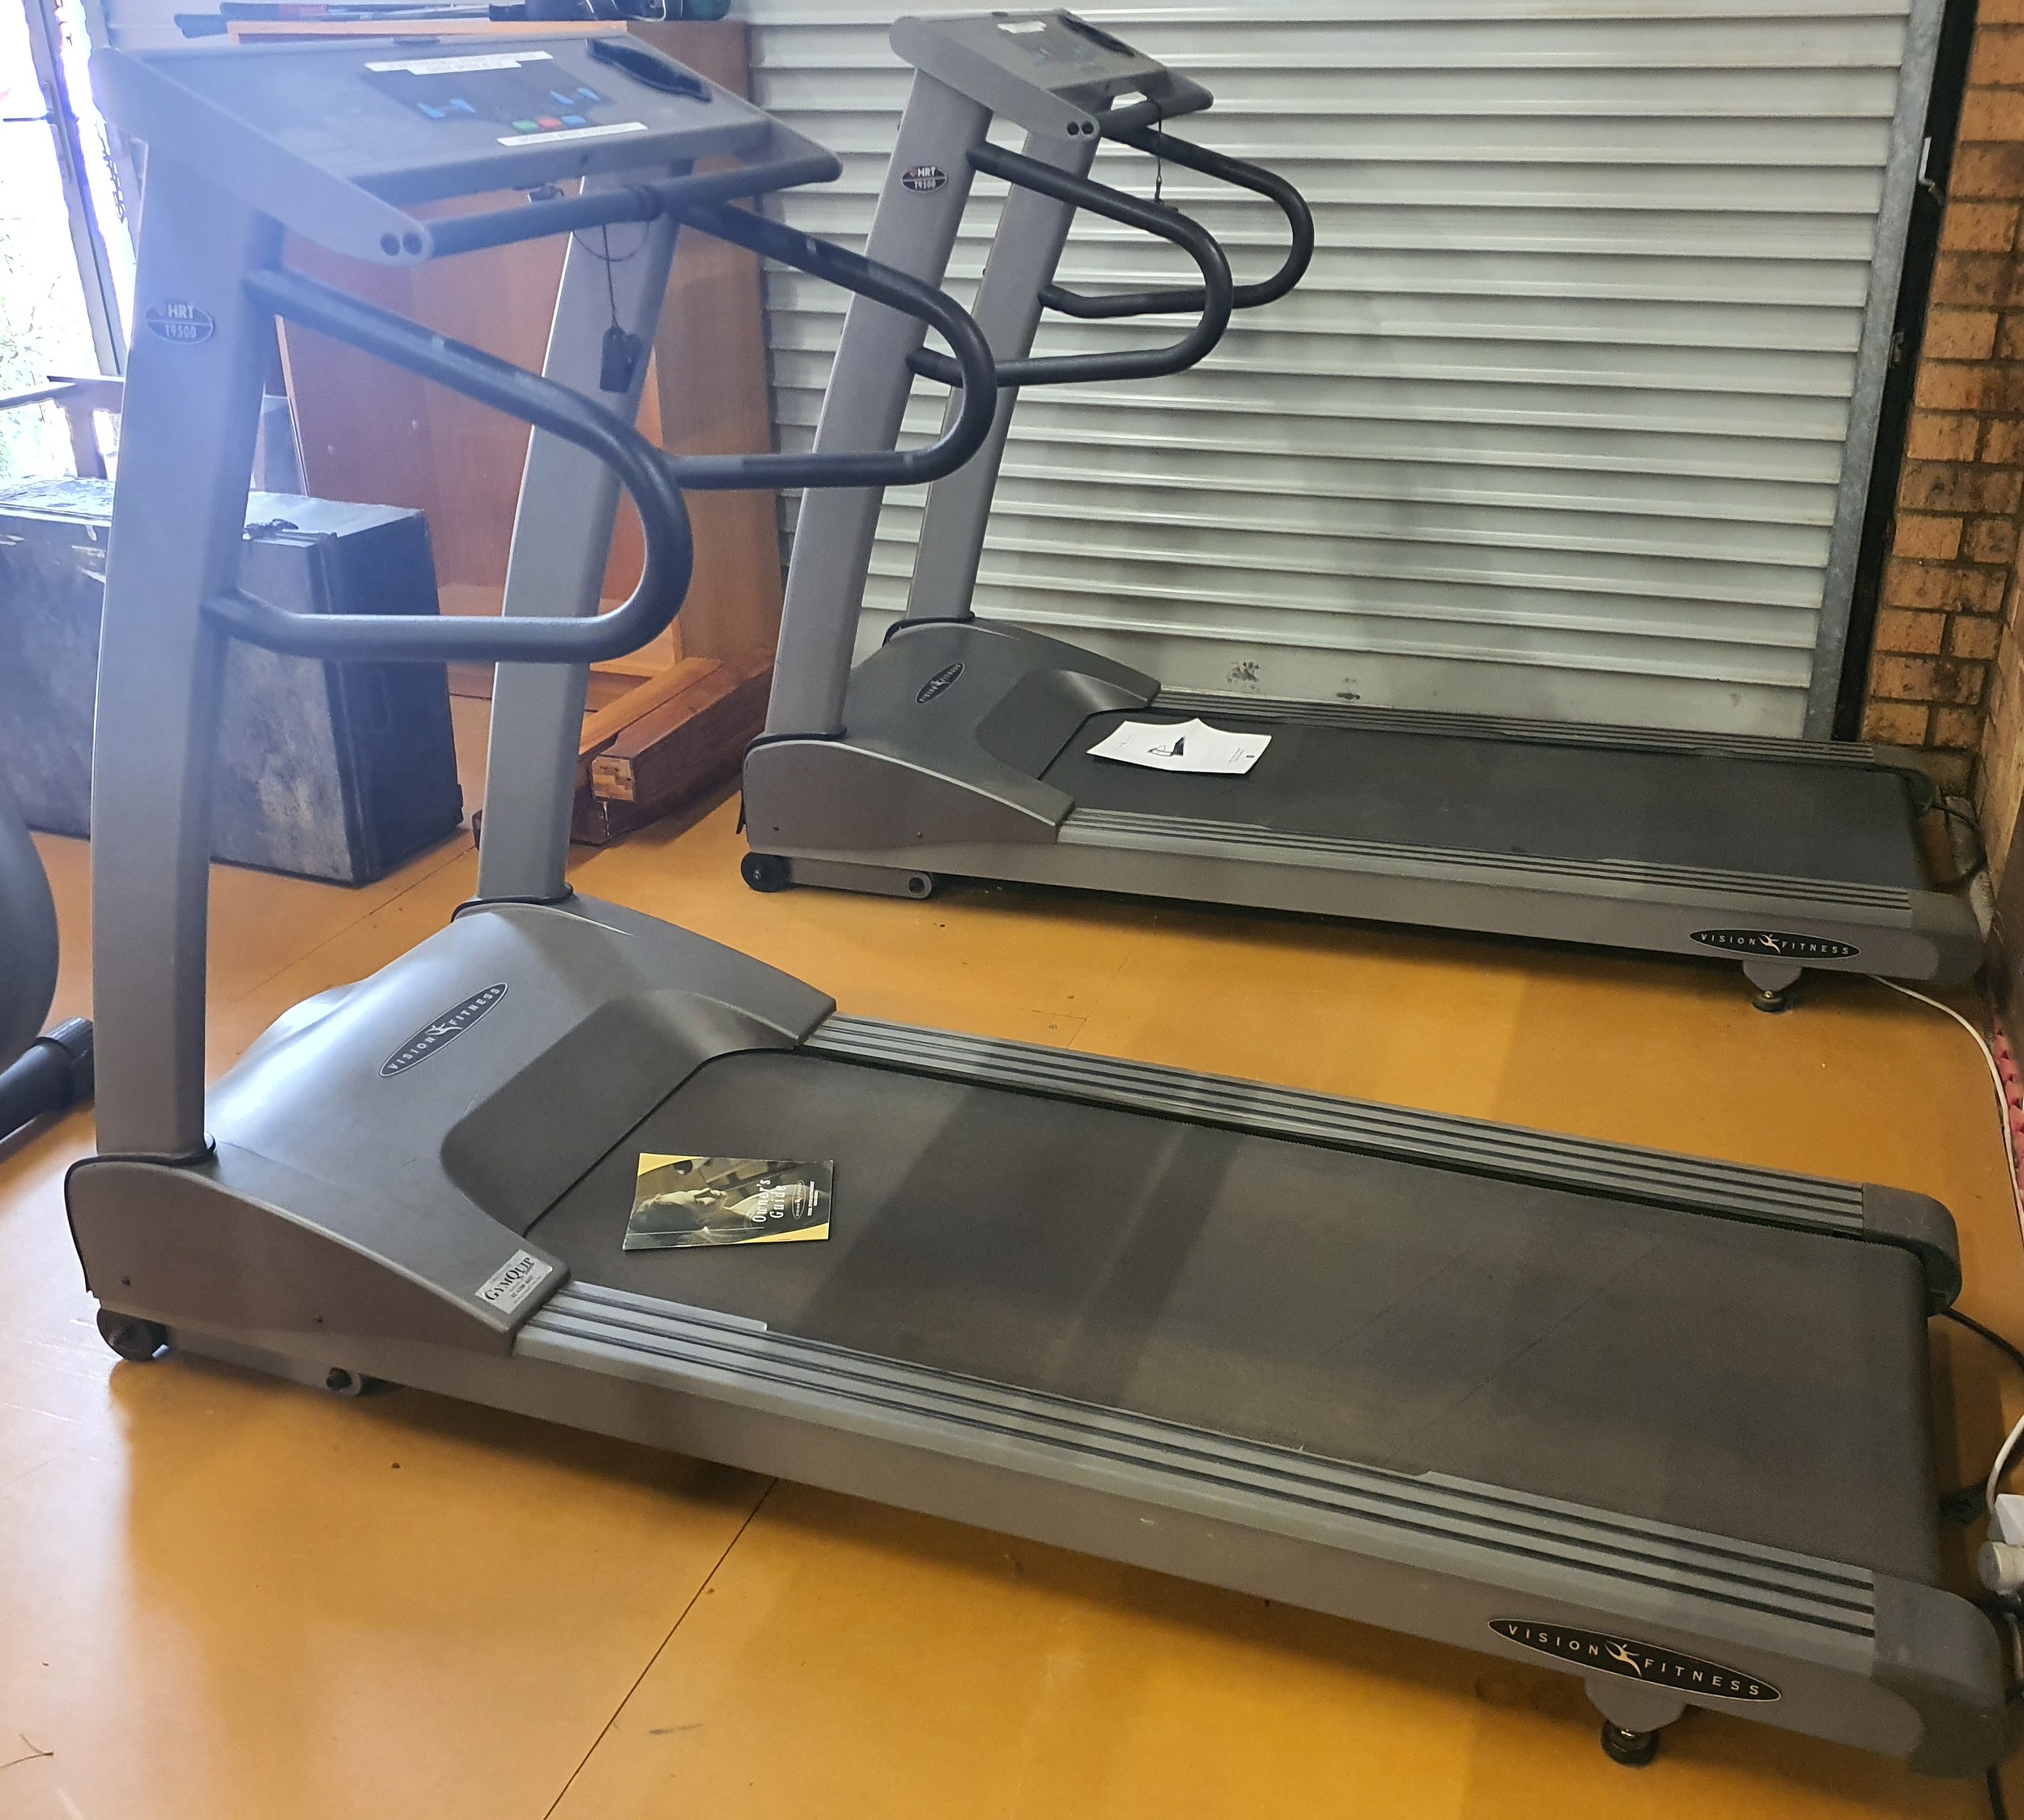 Vision Fitness T9500 Treadmill - Lot 1171214 | ALLBIDS